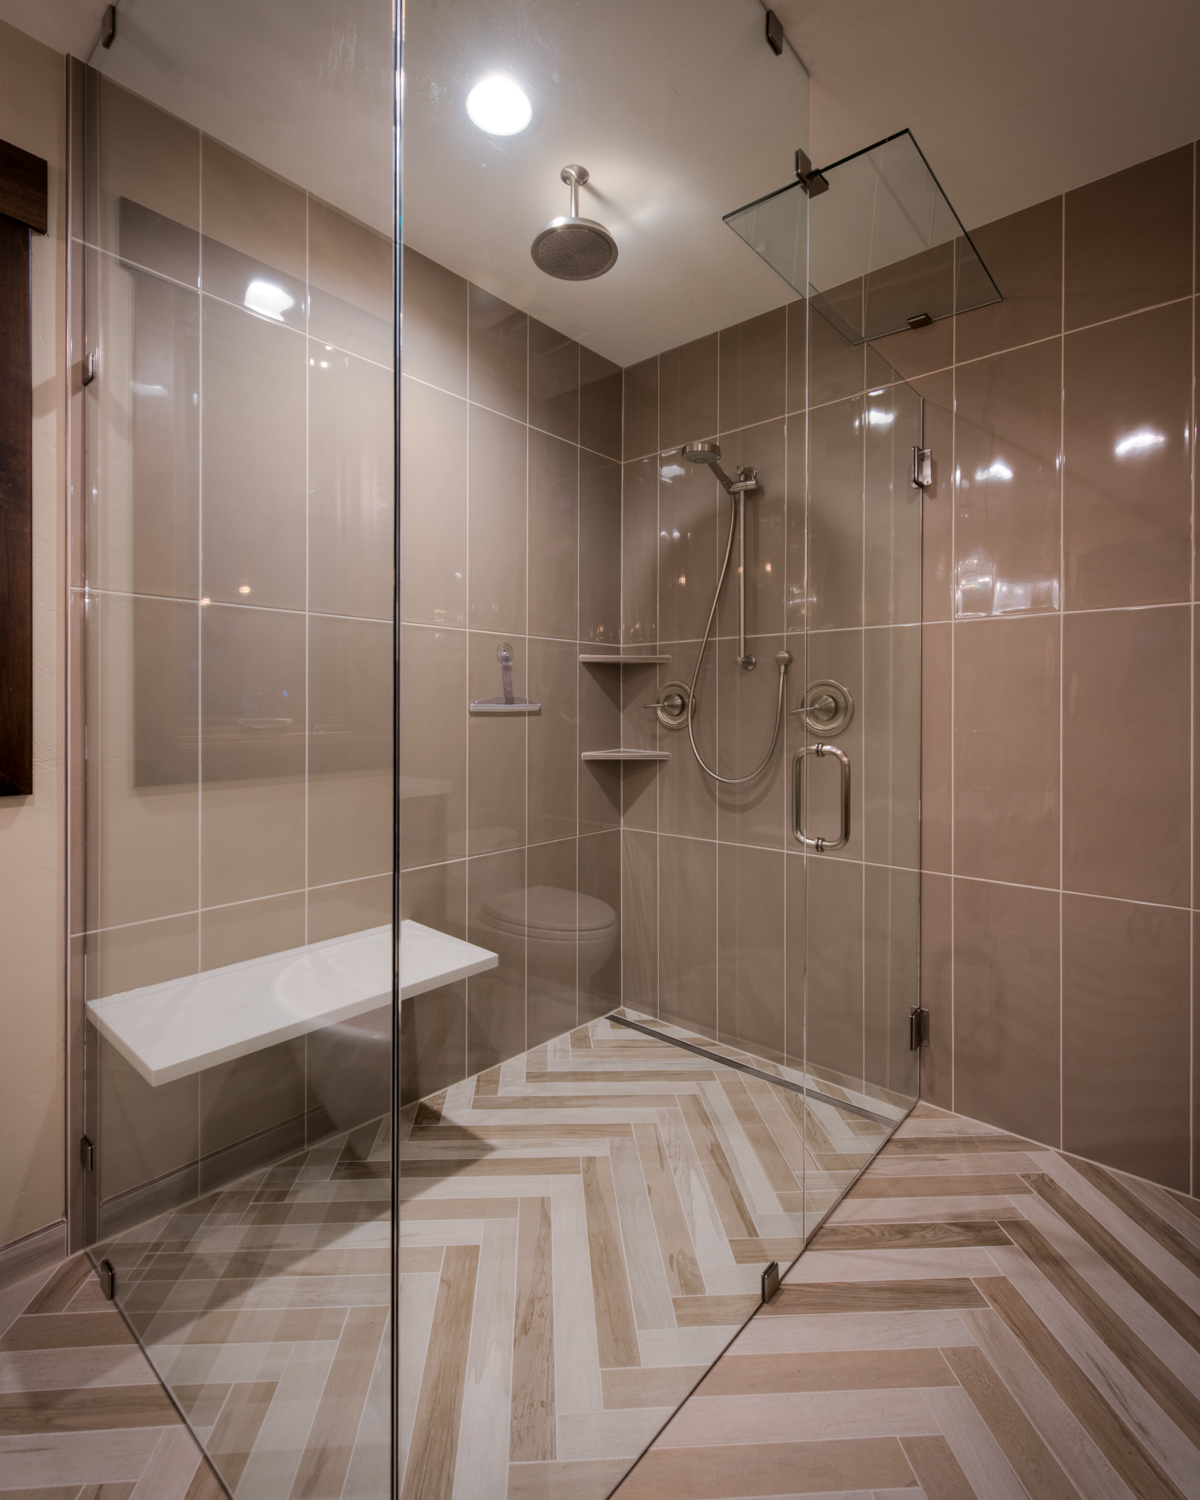 master-bathroom-remodel-glass-shower-floating-bench-rain-head